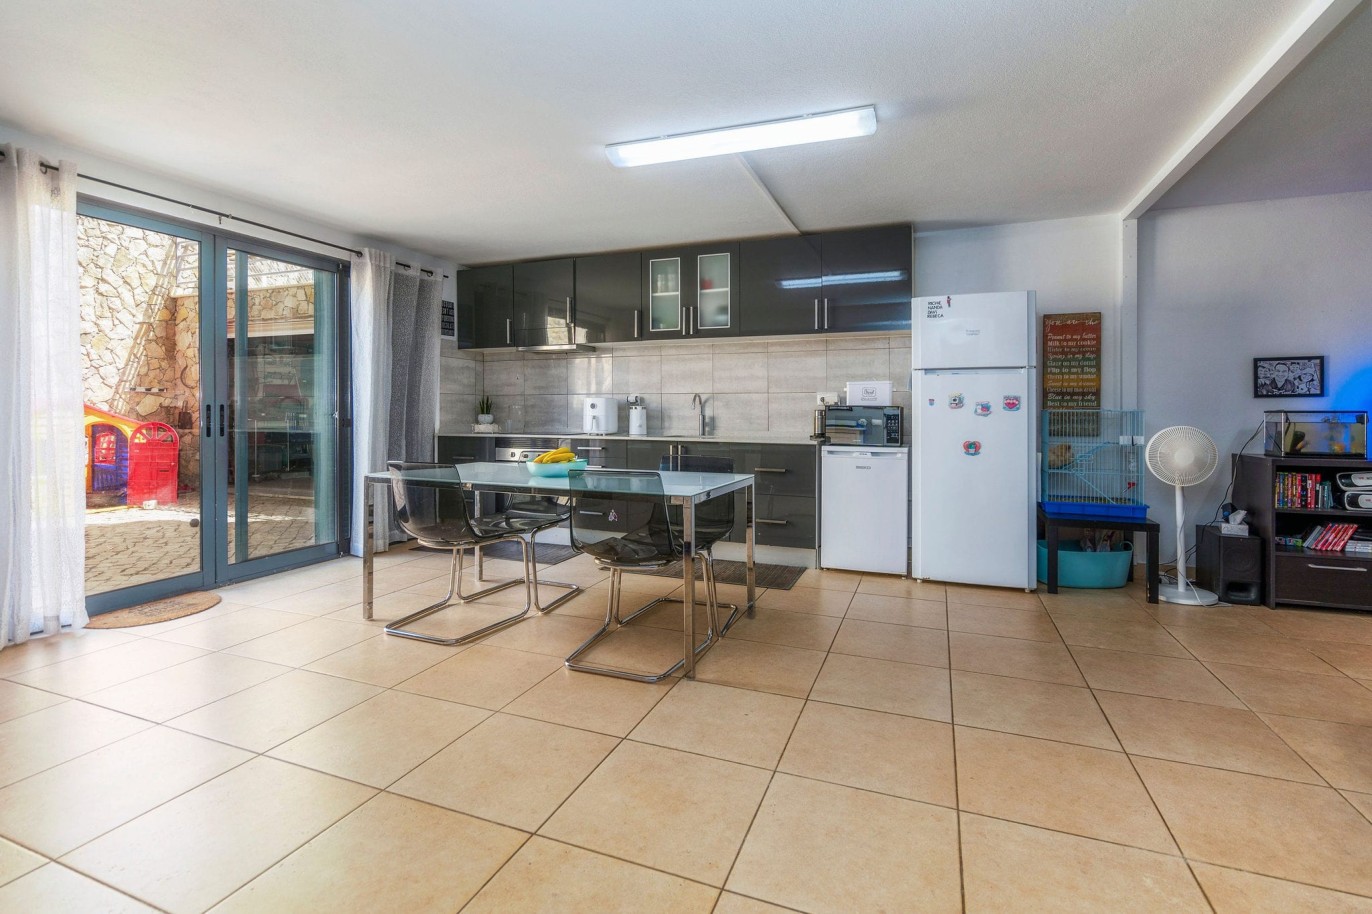 3+1 bedroom villa & 2 bedroom apartment for sale in Quarteira, Algarve_240773